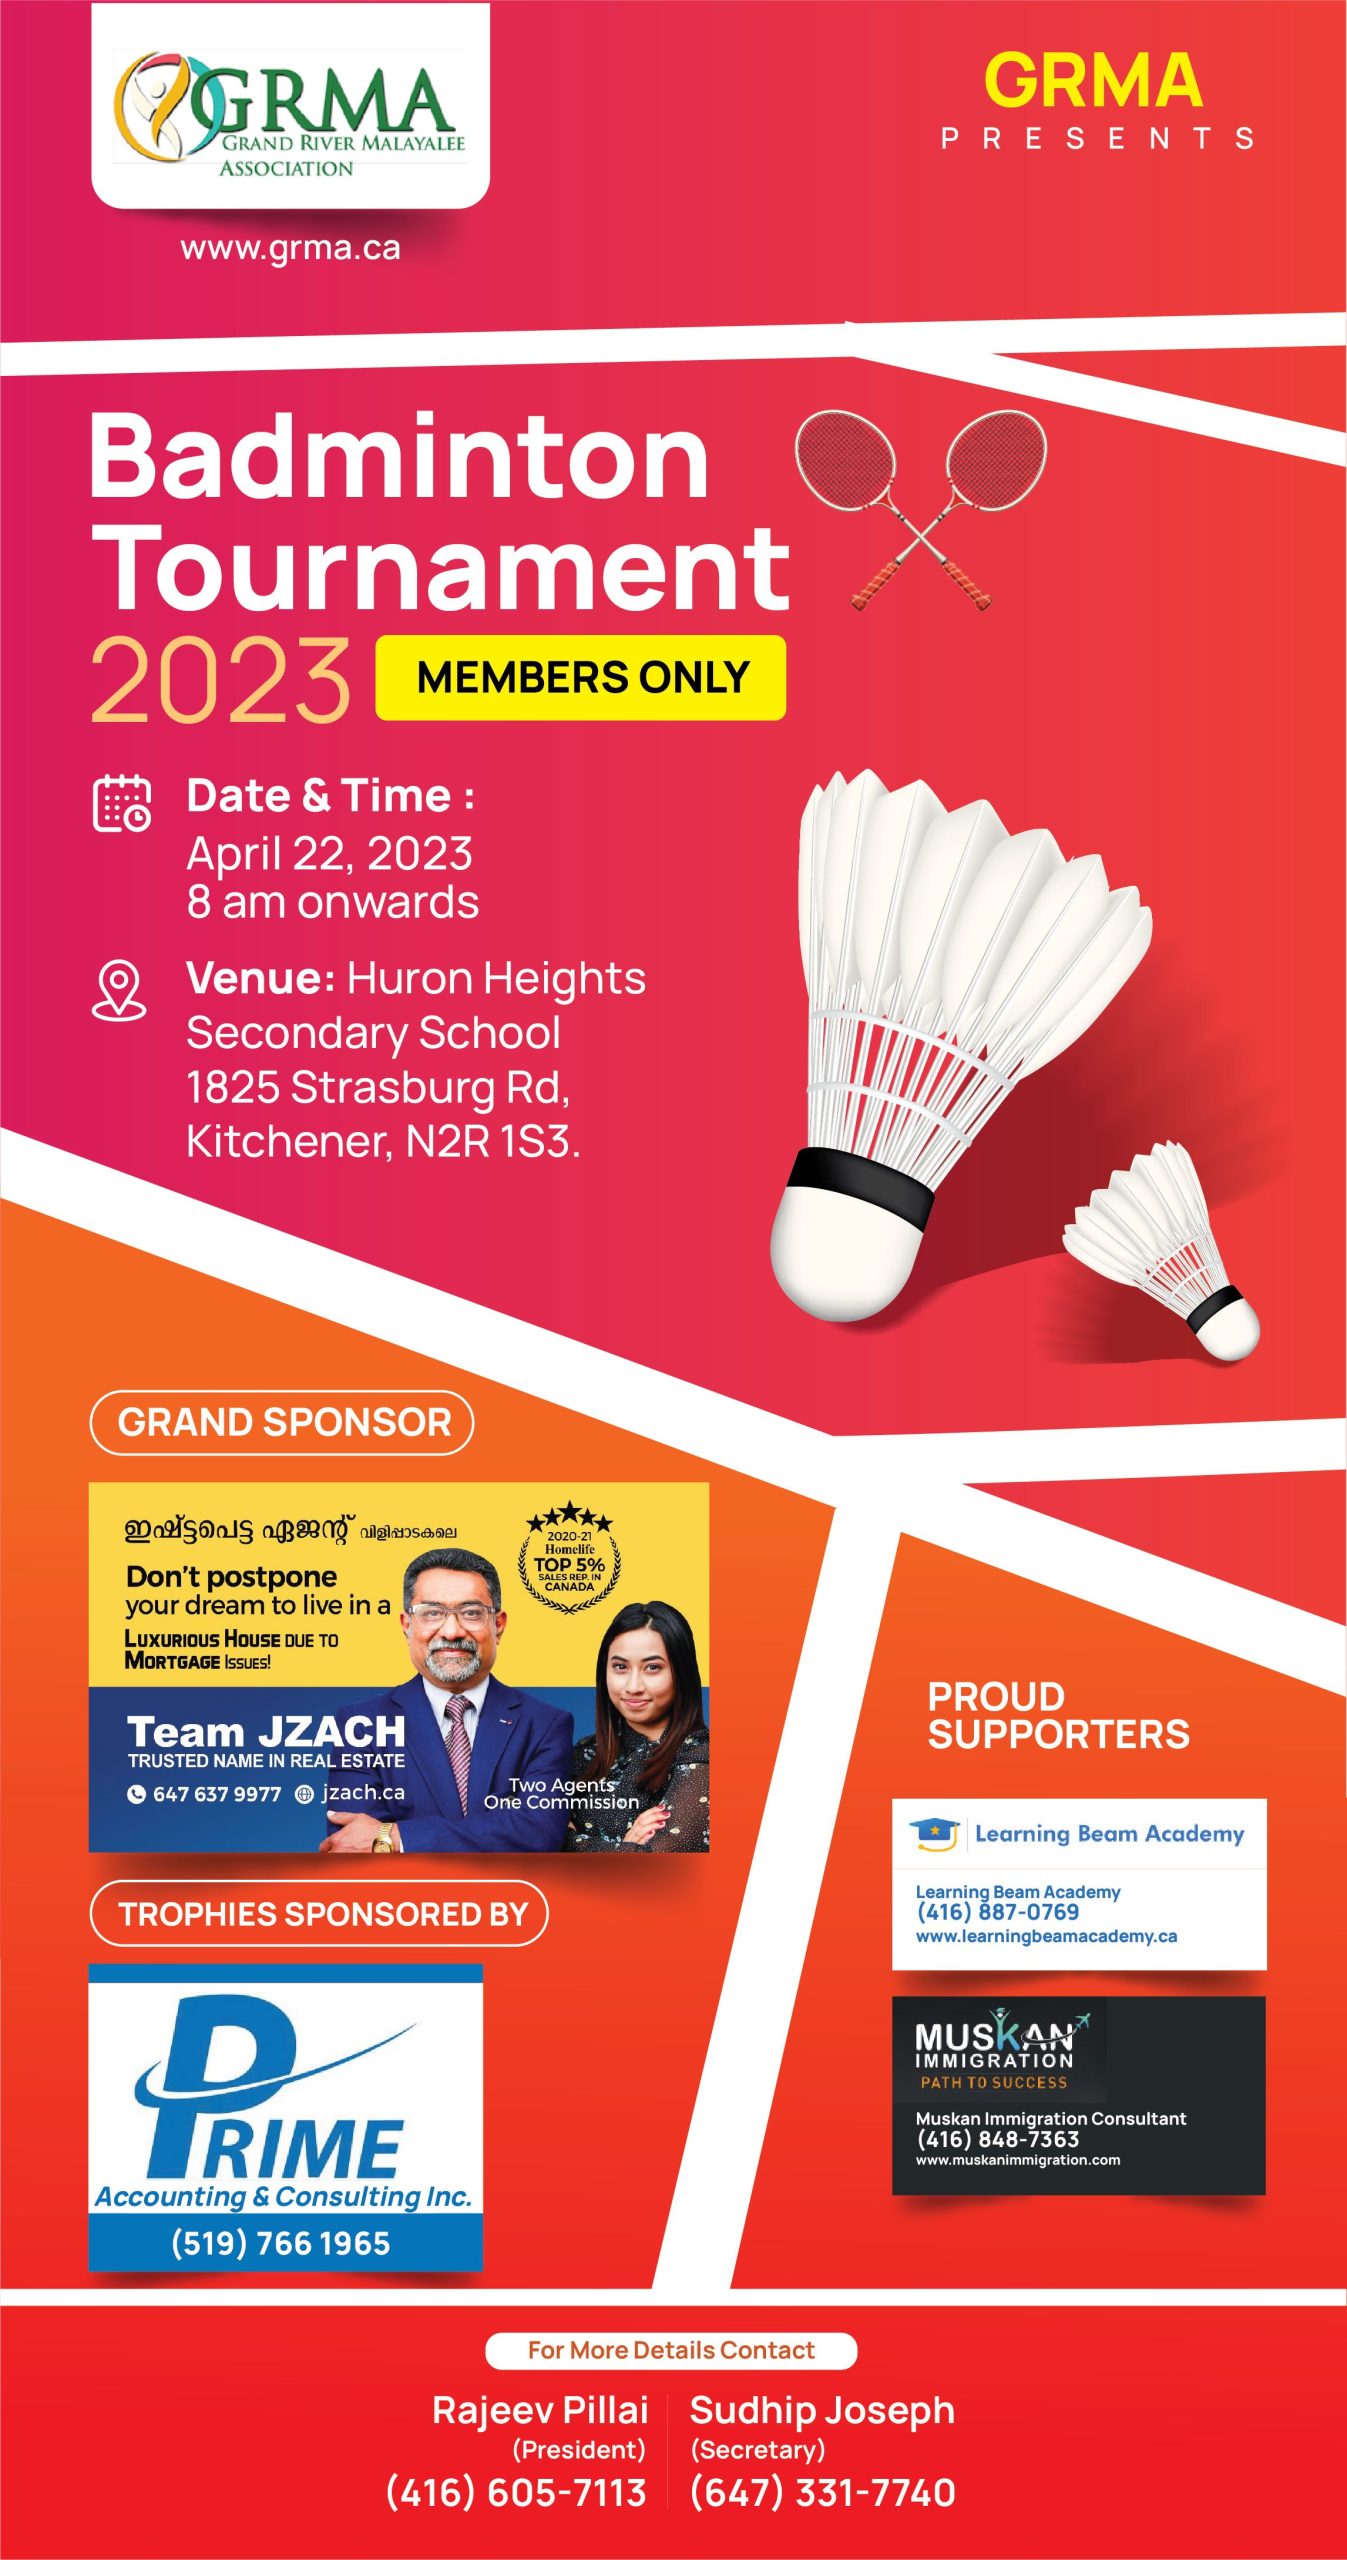 GRMA Presents Badminton Tournament 2023